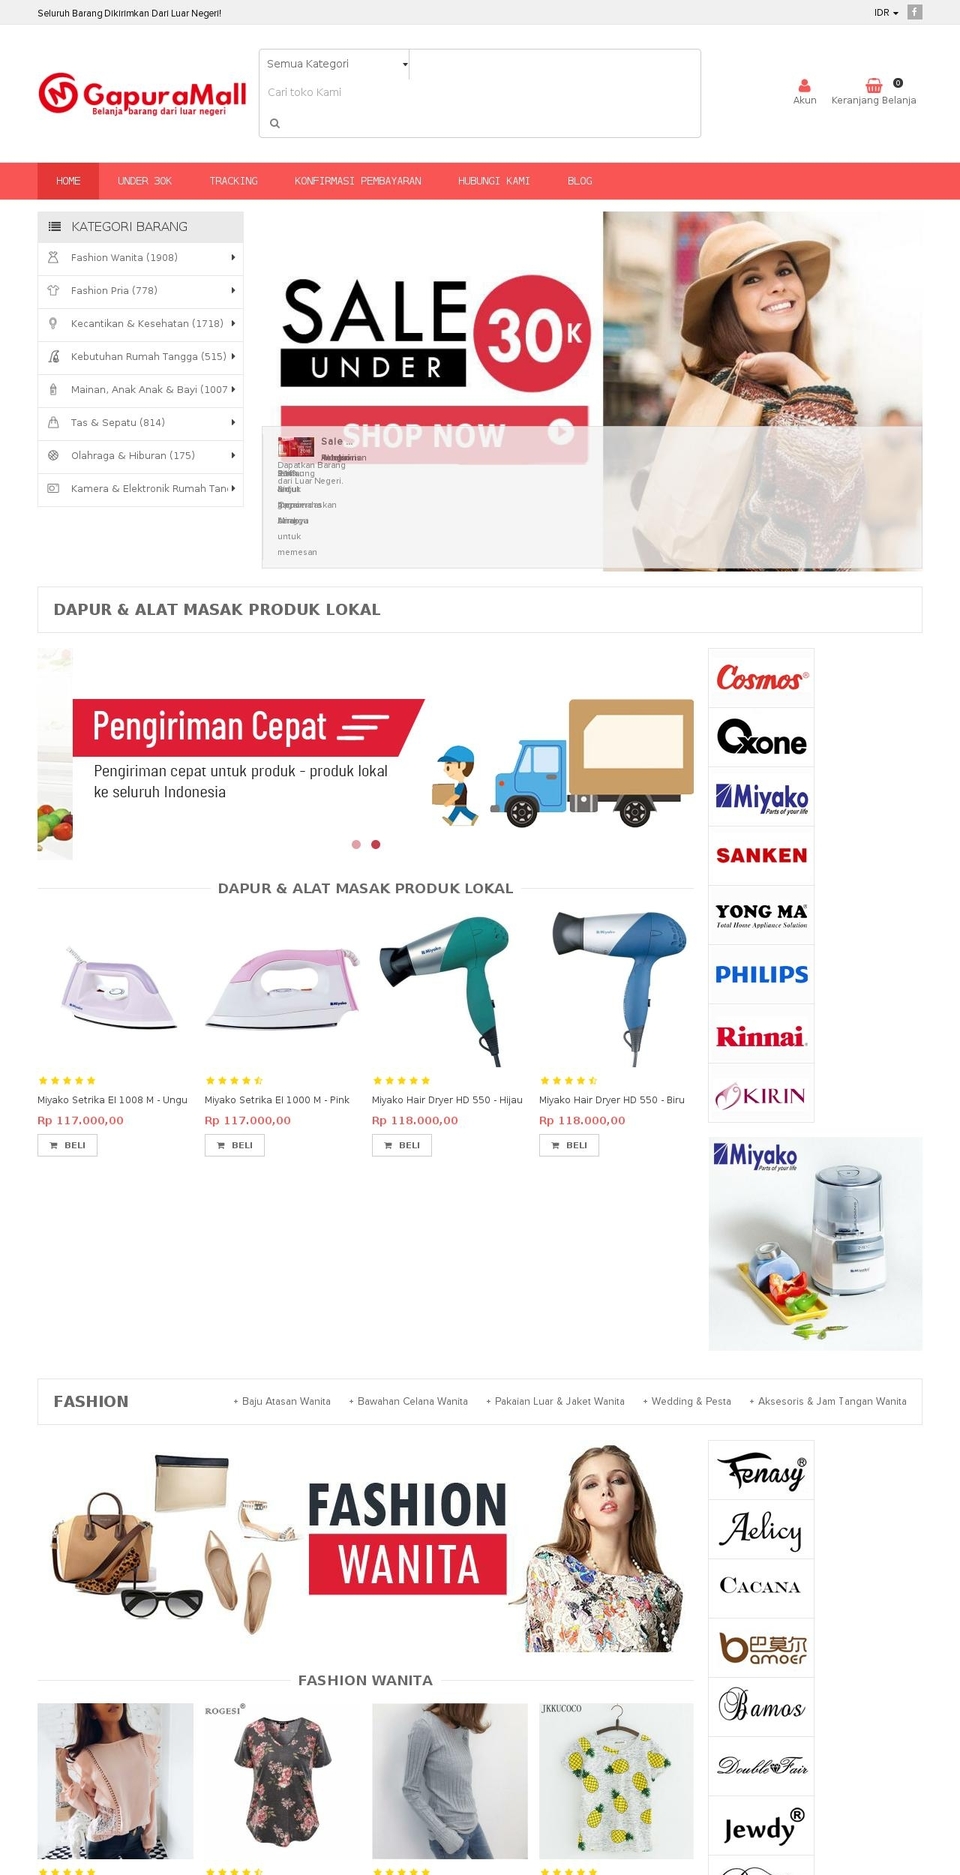 gapuramall.id shopify website screenshot